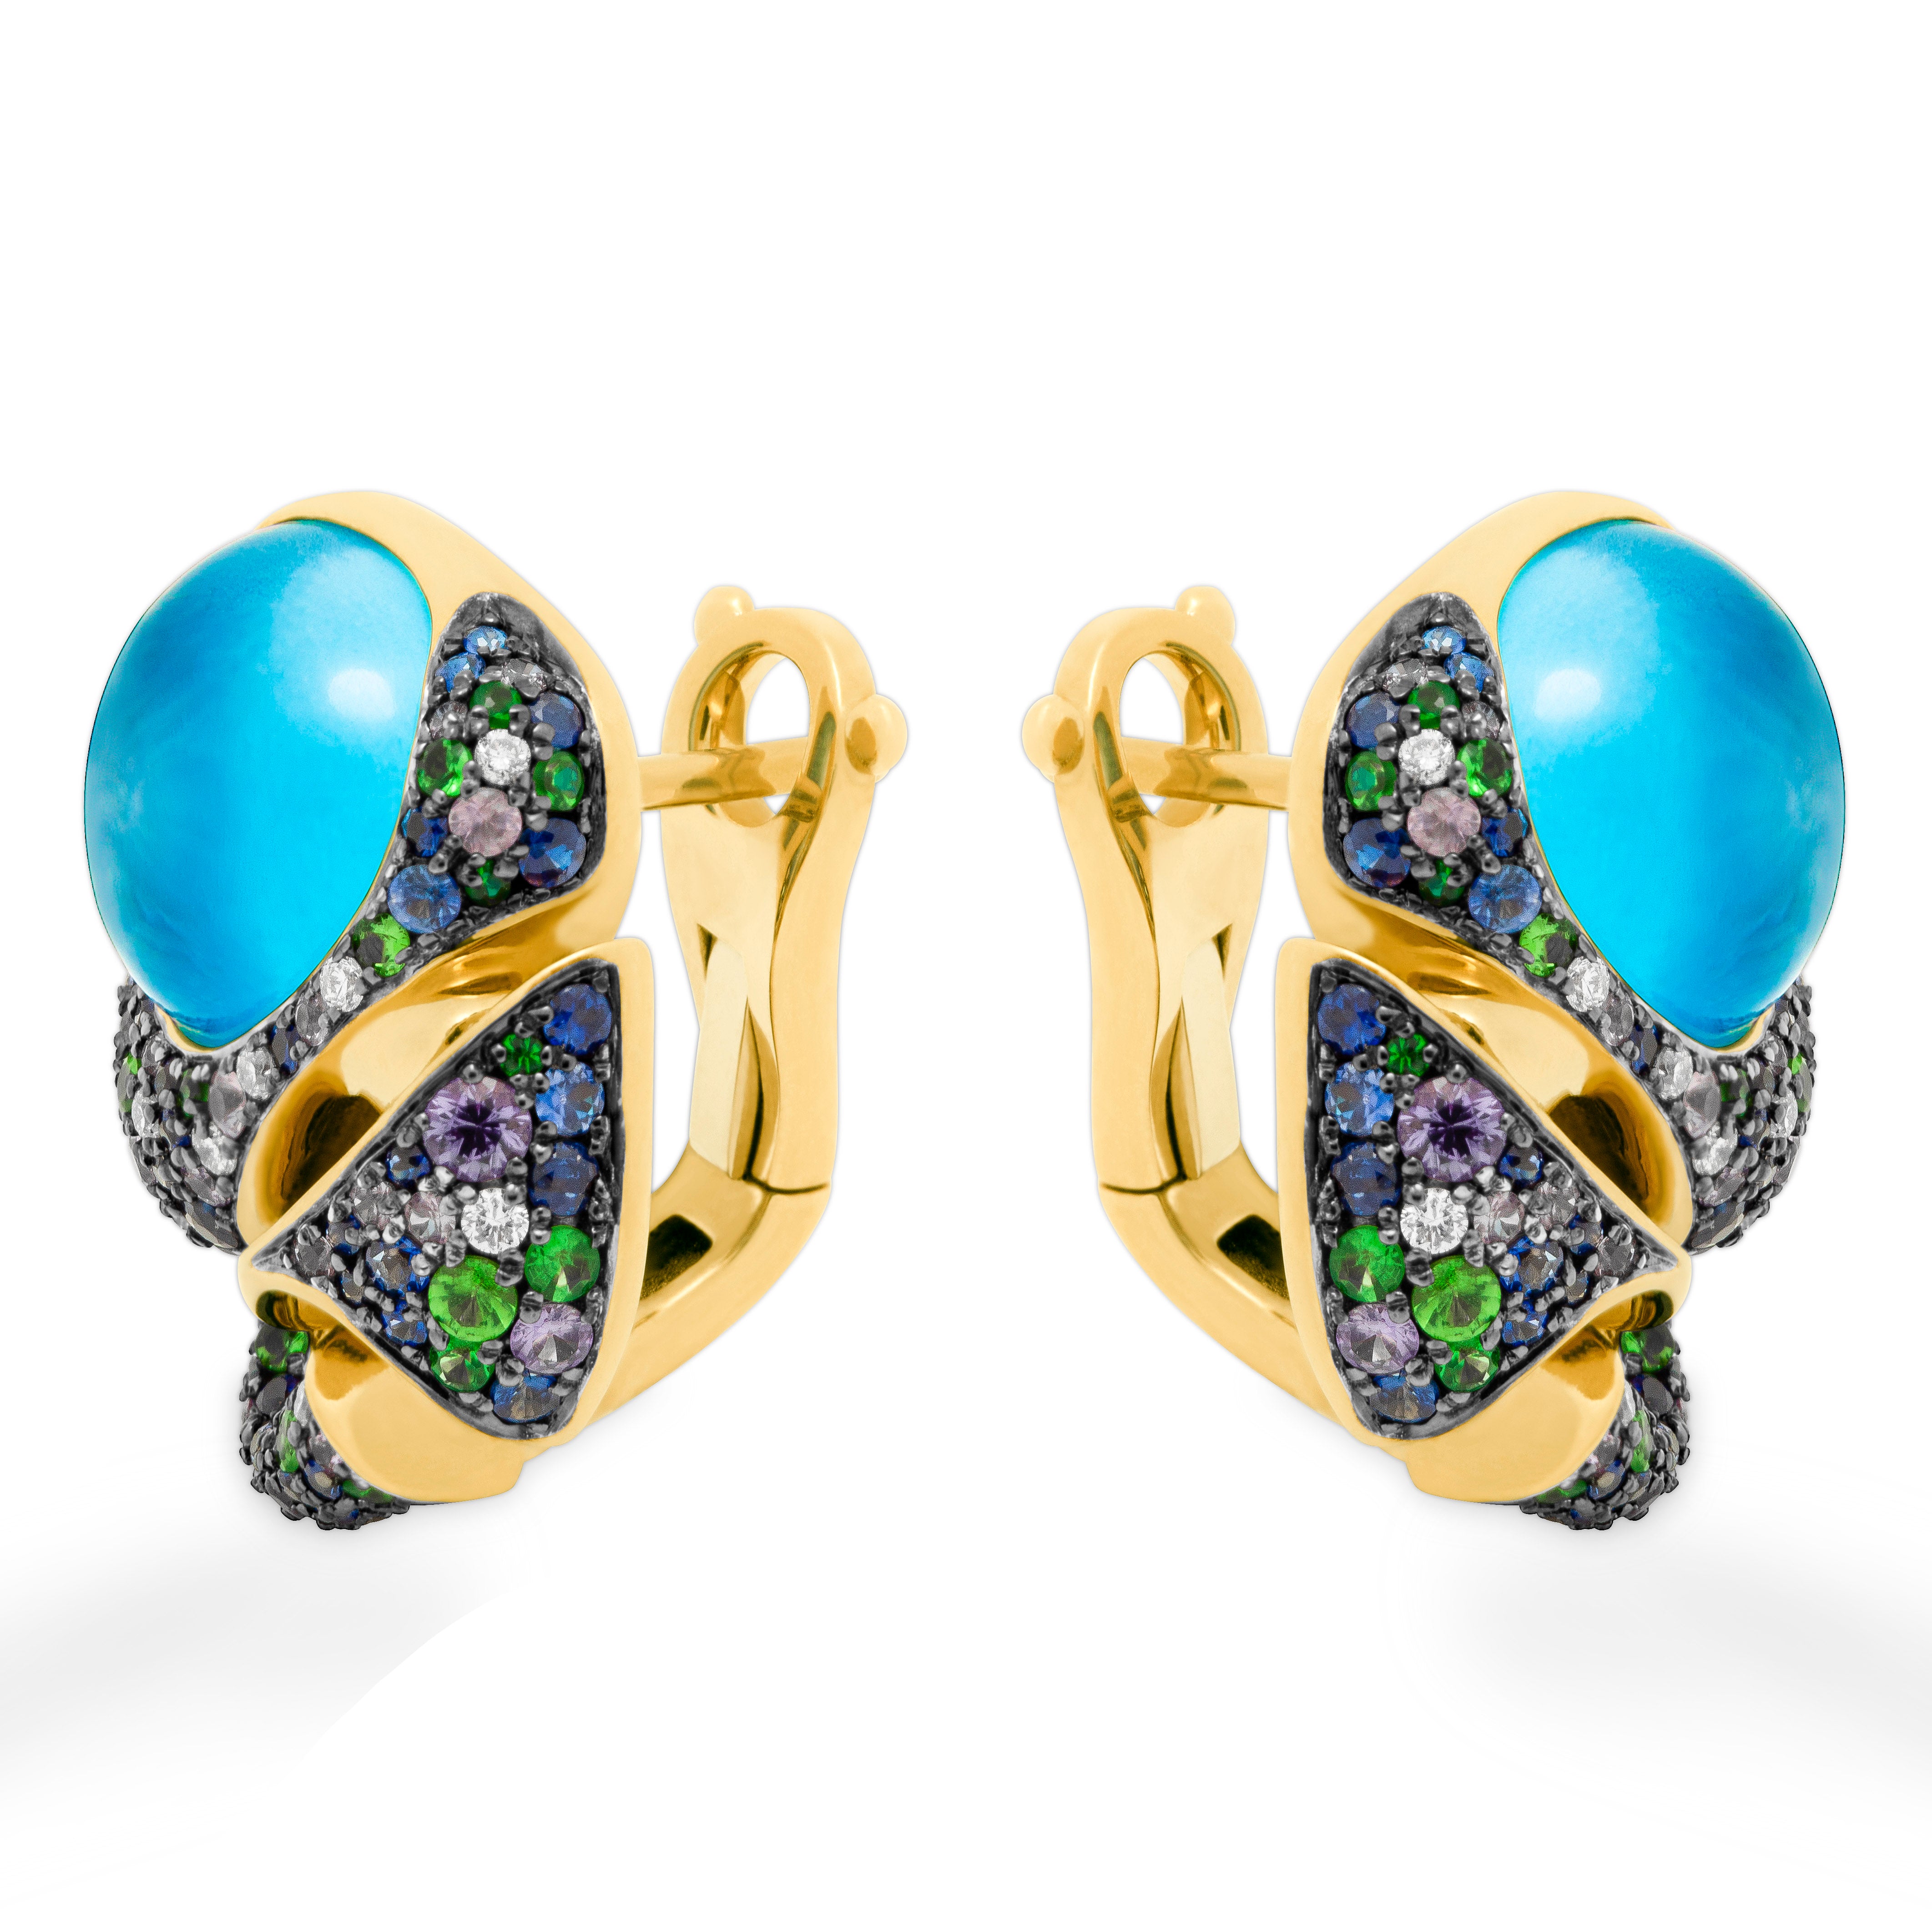 E 0007-1 18K Yellow Gold, Topaz, Sapphires, Diamonds Earrings